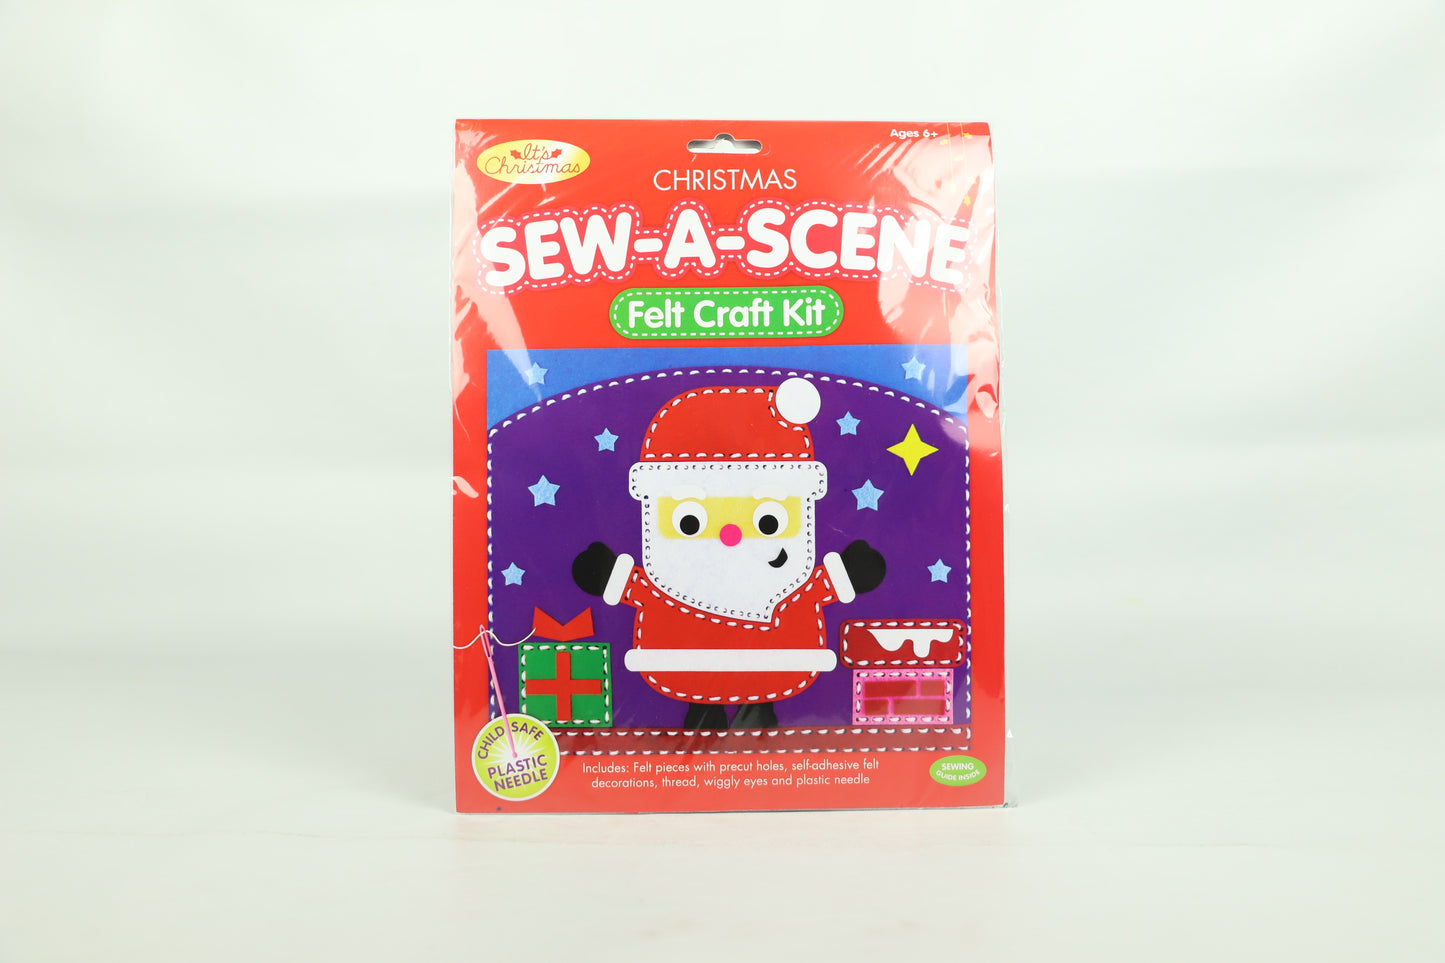 It’s Christmas Sew-a-Scene Felt Craft Kit - Santa - Makes 1